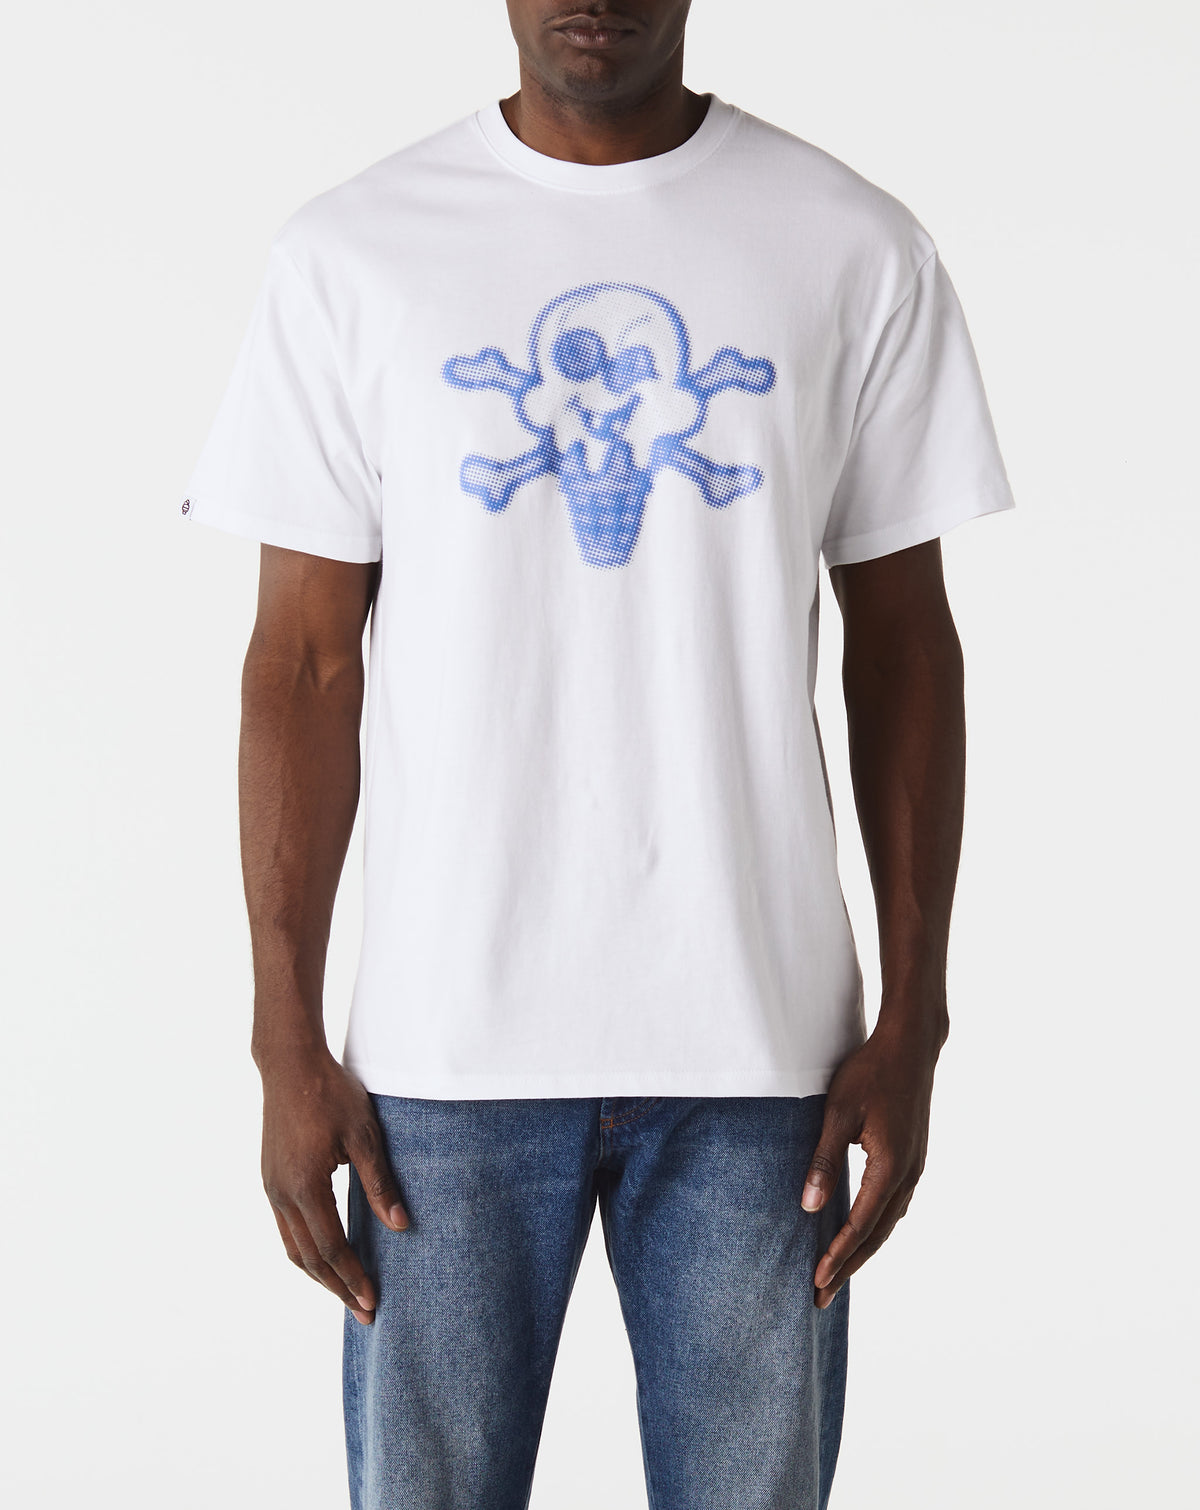 IceCream Hazy T-Shirt - Rule of Next Apparel